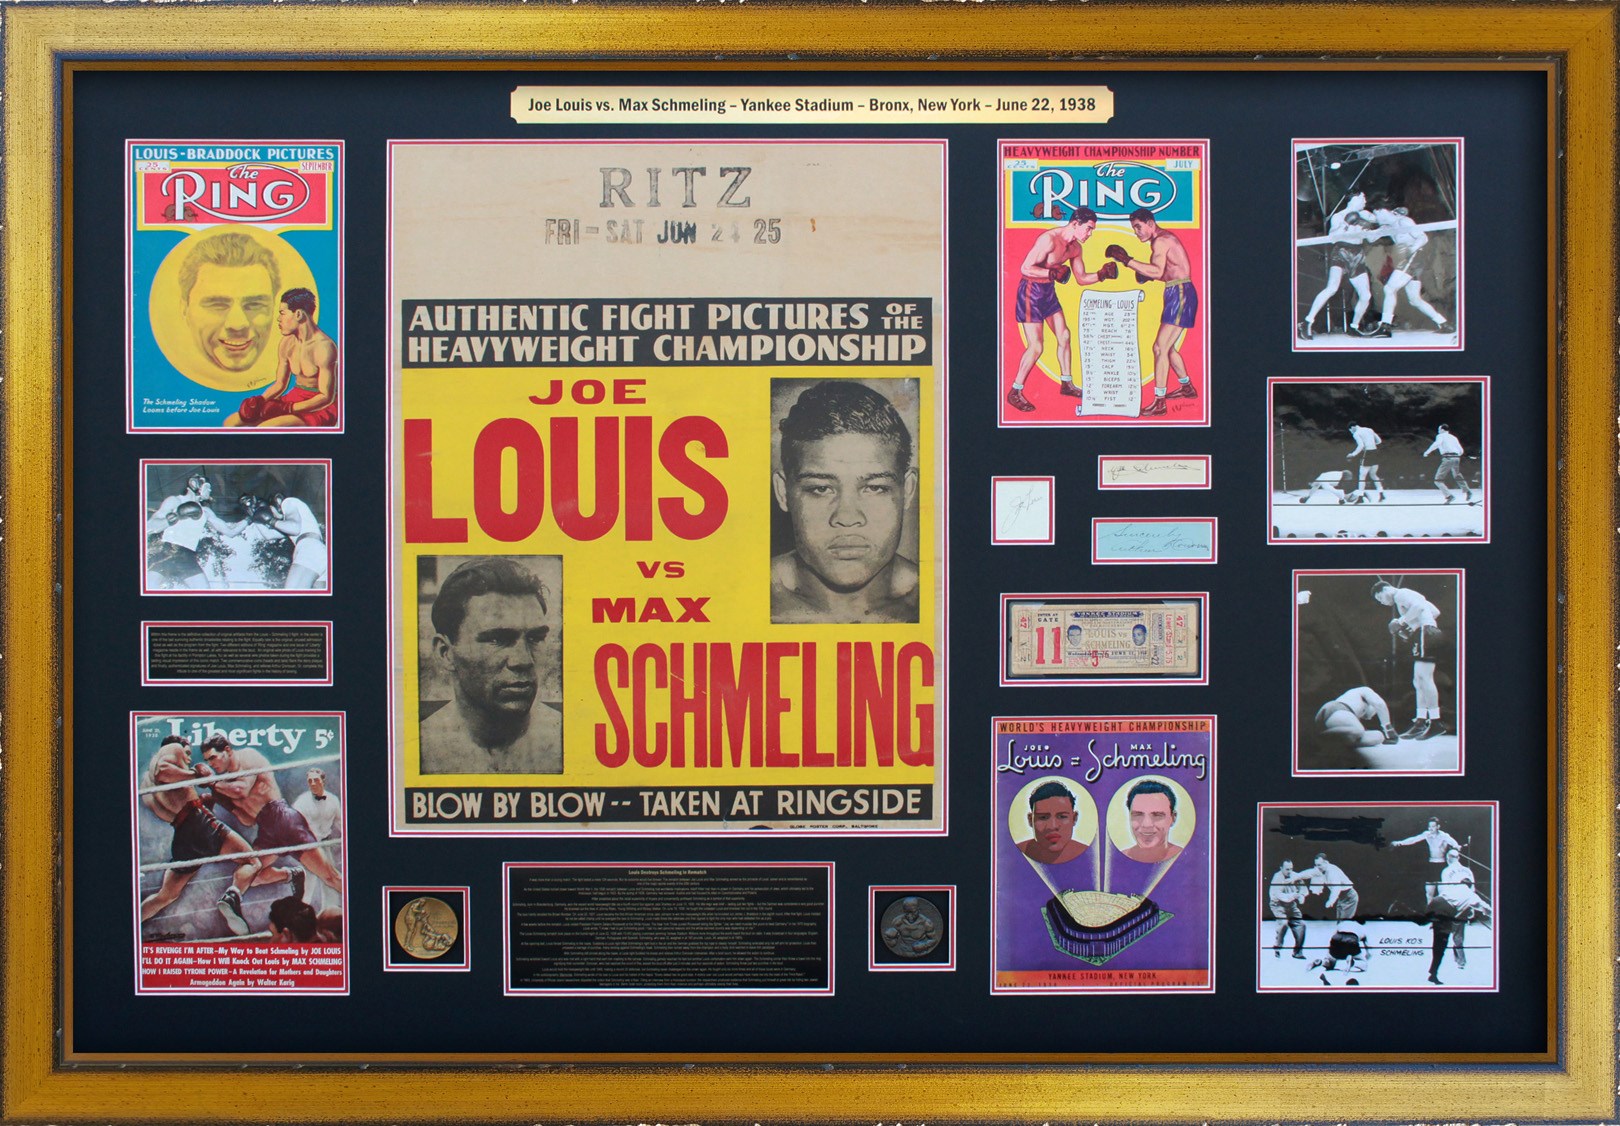 Muhammad Ali & Boxing - 1938 Joe Louis vs. Max Schmeling II - Complete with Autographs, Ticket, Program & Broadside